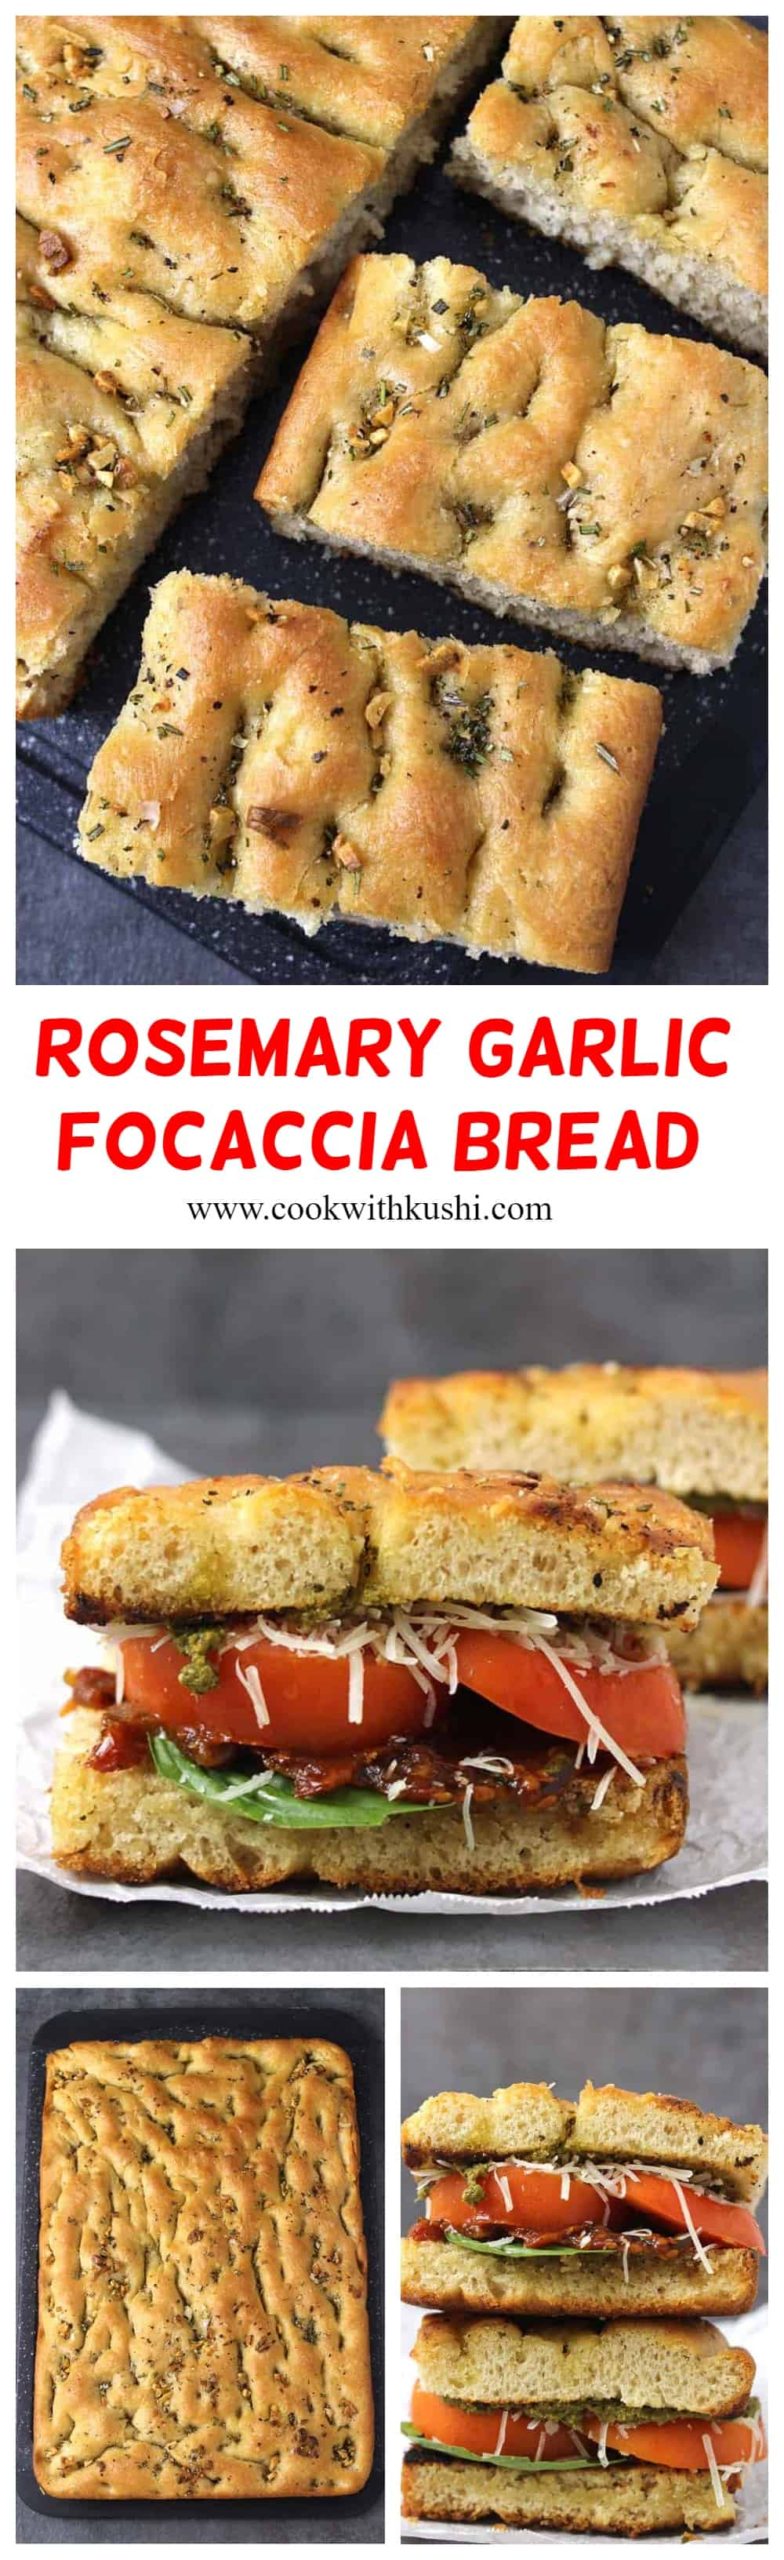 Italian Rosemary Garlic Focaccia Bread Recipe #italian #rosemary #focaccia #sourdough #keto #vegan